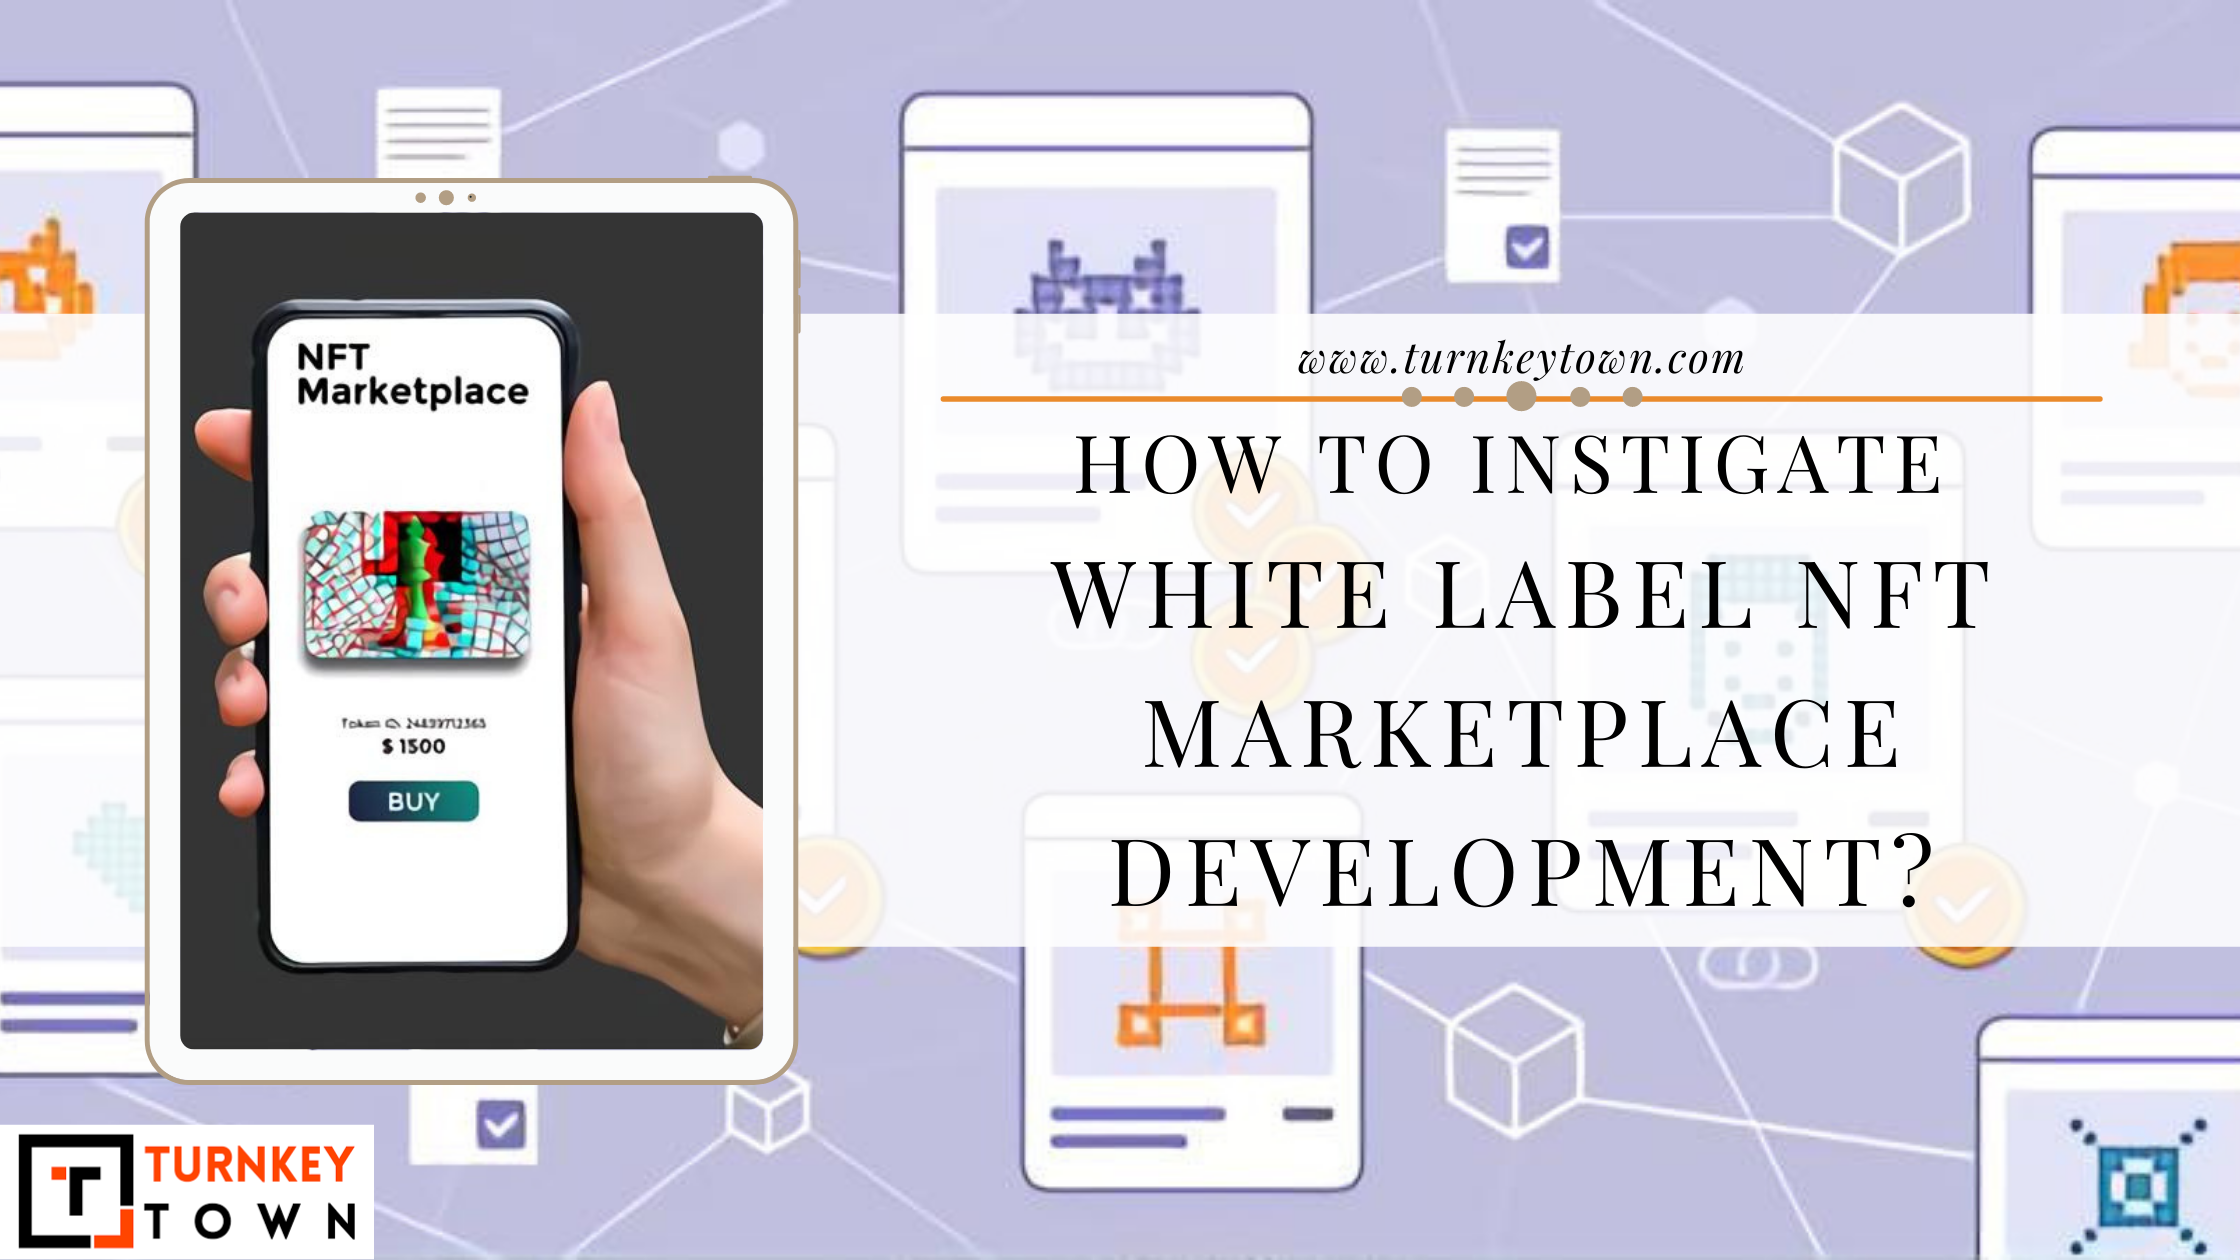 White label NFT Marketplace Development